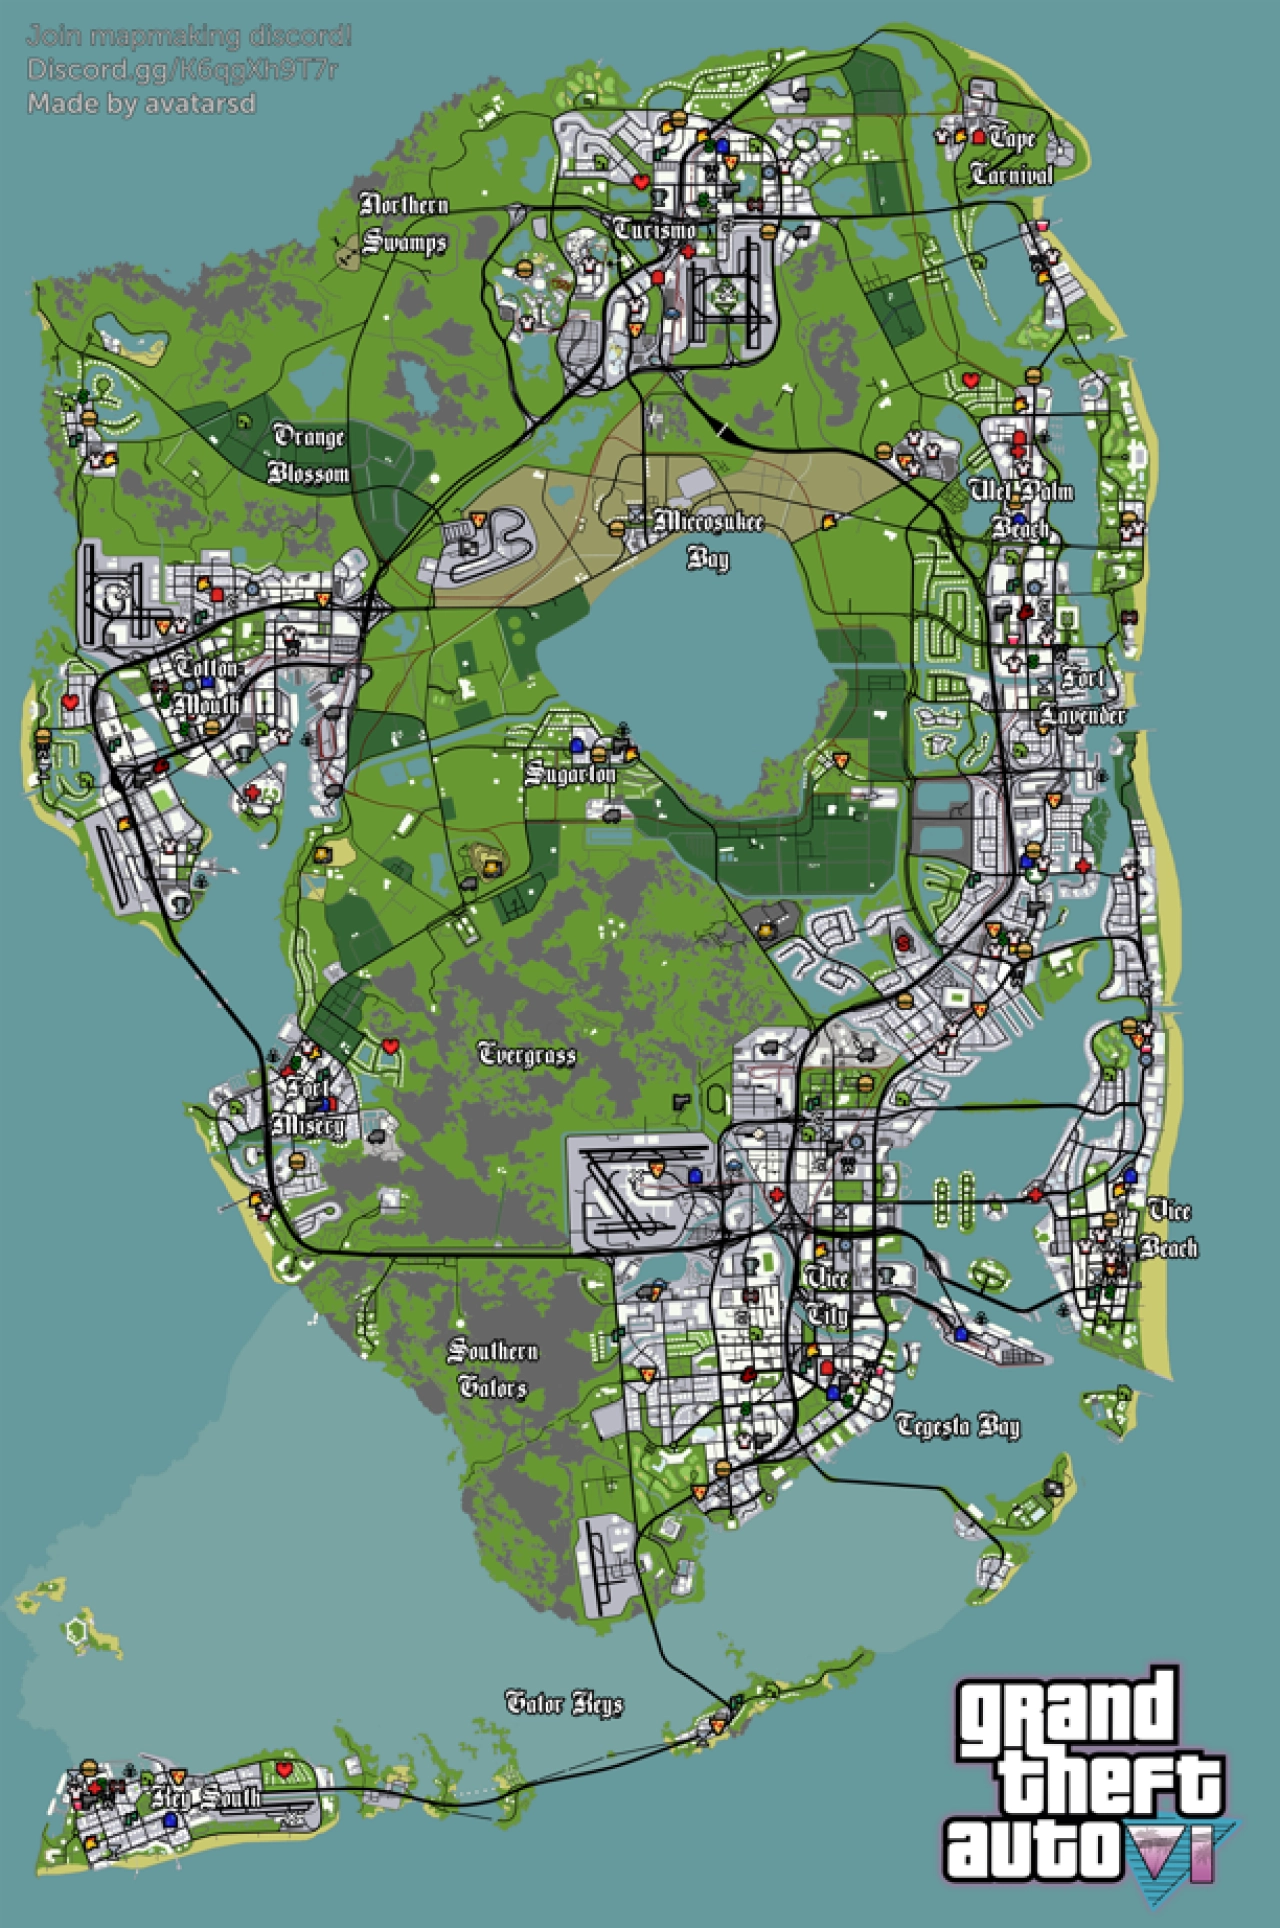 San Andreas Style GTA VI Map By avatarsd